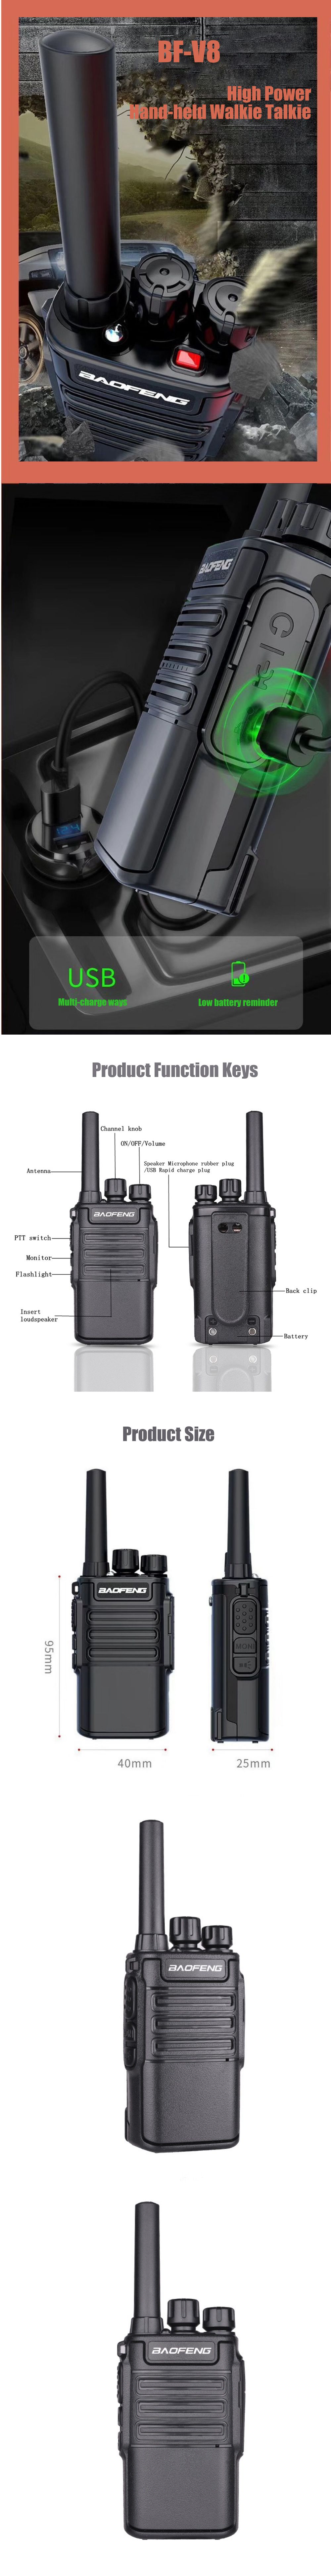 BAOFENG-V8-Portable-Wiress-Walkie-Talkie-1800mAh-Handheld-Two-Way-Radio-Communicator-Transceiver-For-1709473